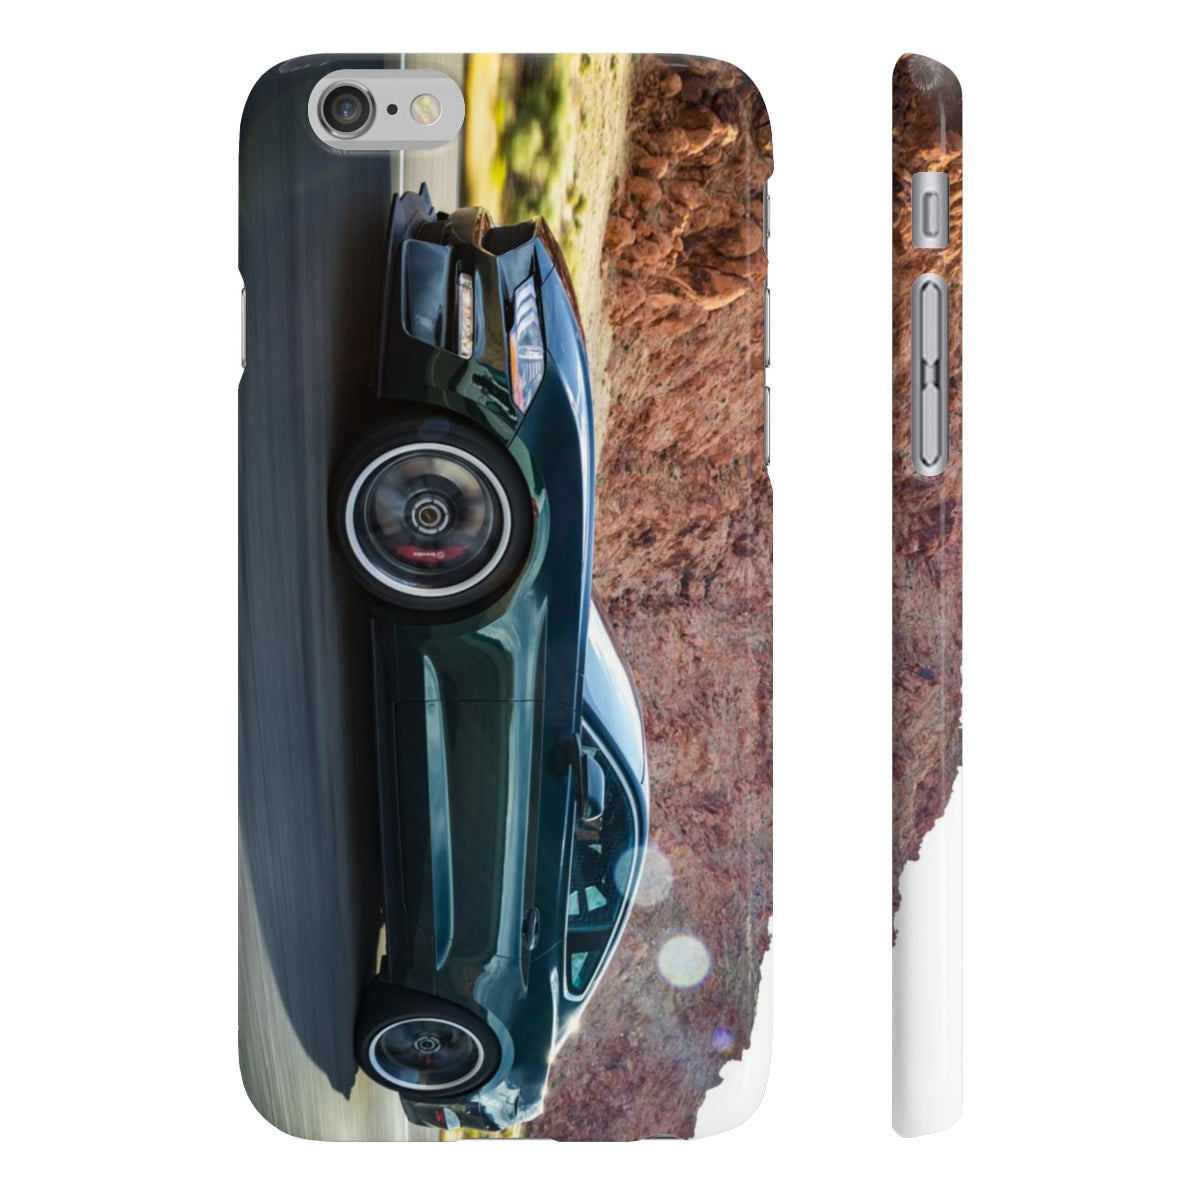 Tenký obal na telefon Steeda Steve McQueen Limited Edition Bullitt Mustang Image pro iPhone 6, 7 a 8